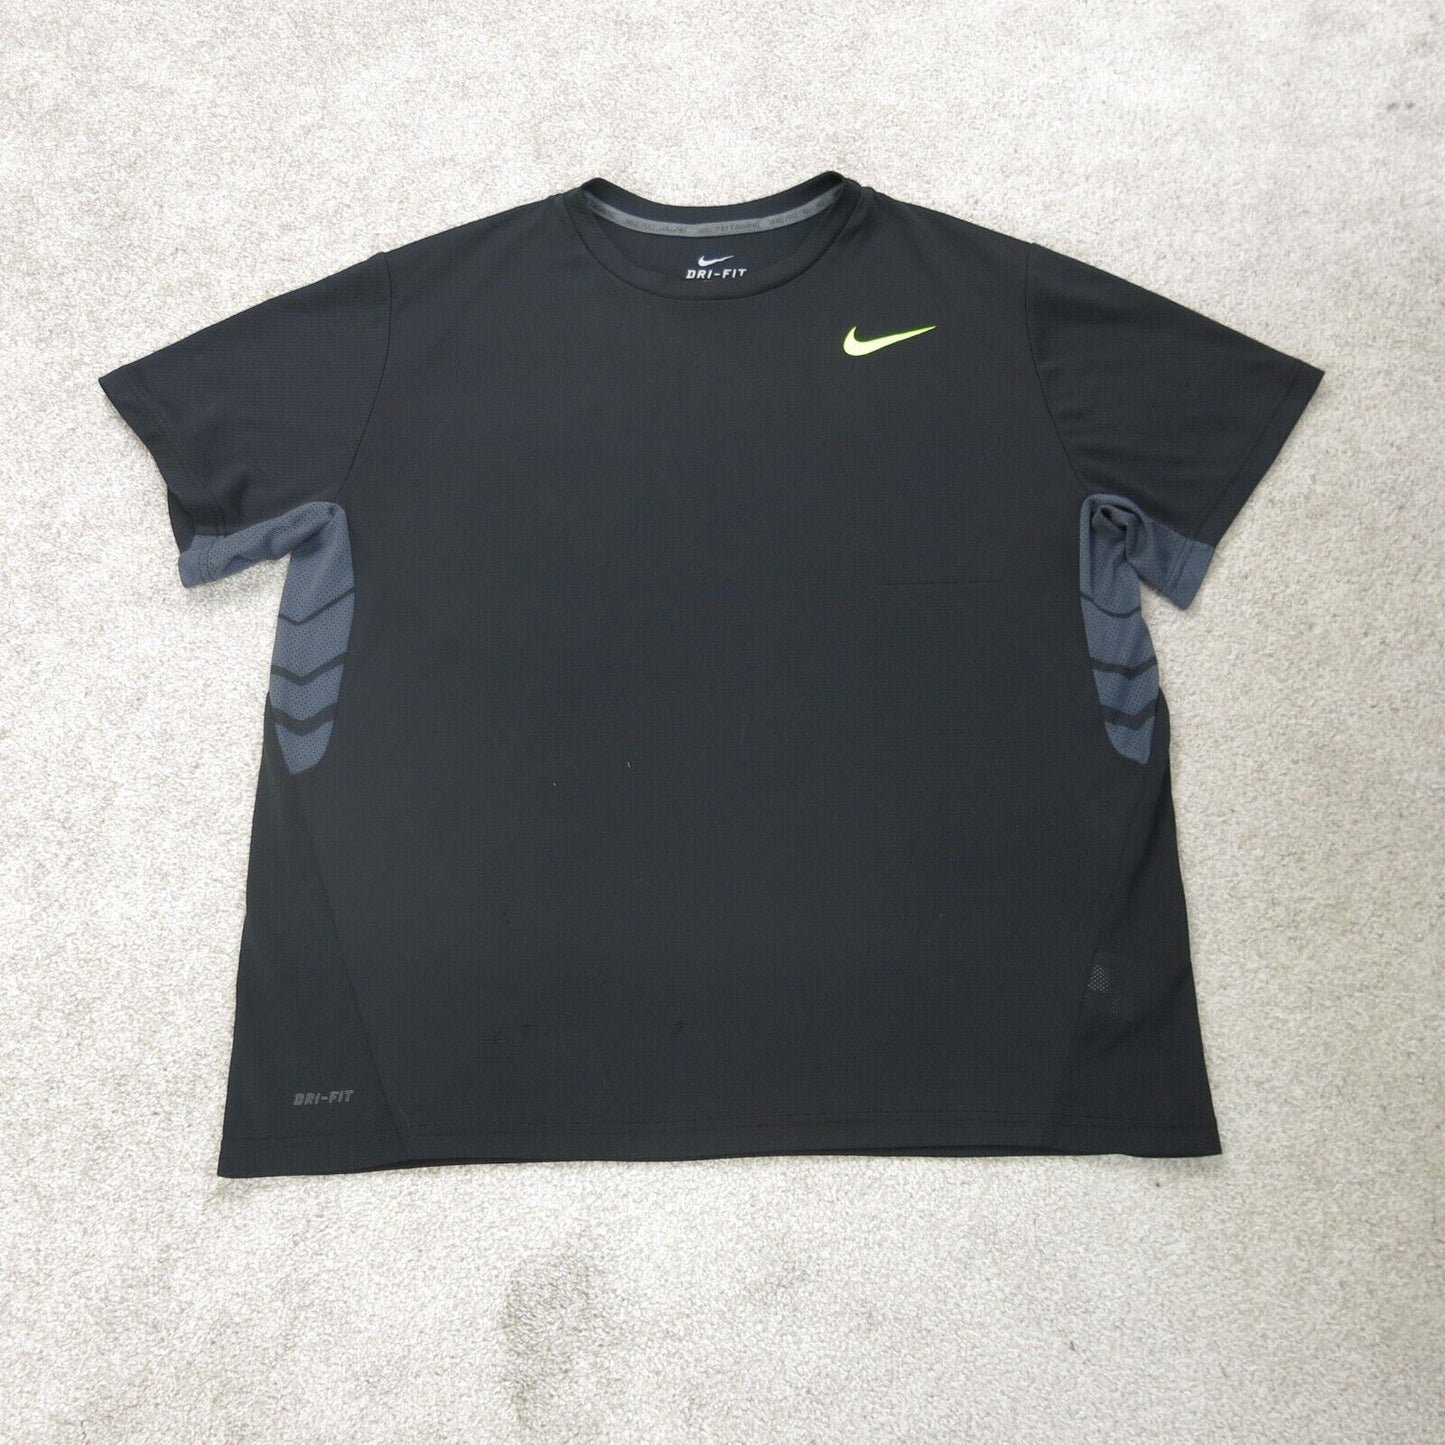 Nike Shirt Mens XXL Black Crew Neck Short Sleeve Lightweight Outdoors Dri Fit